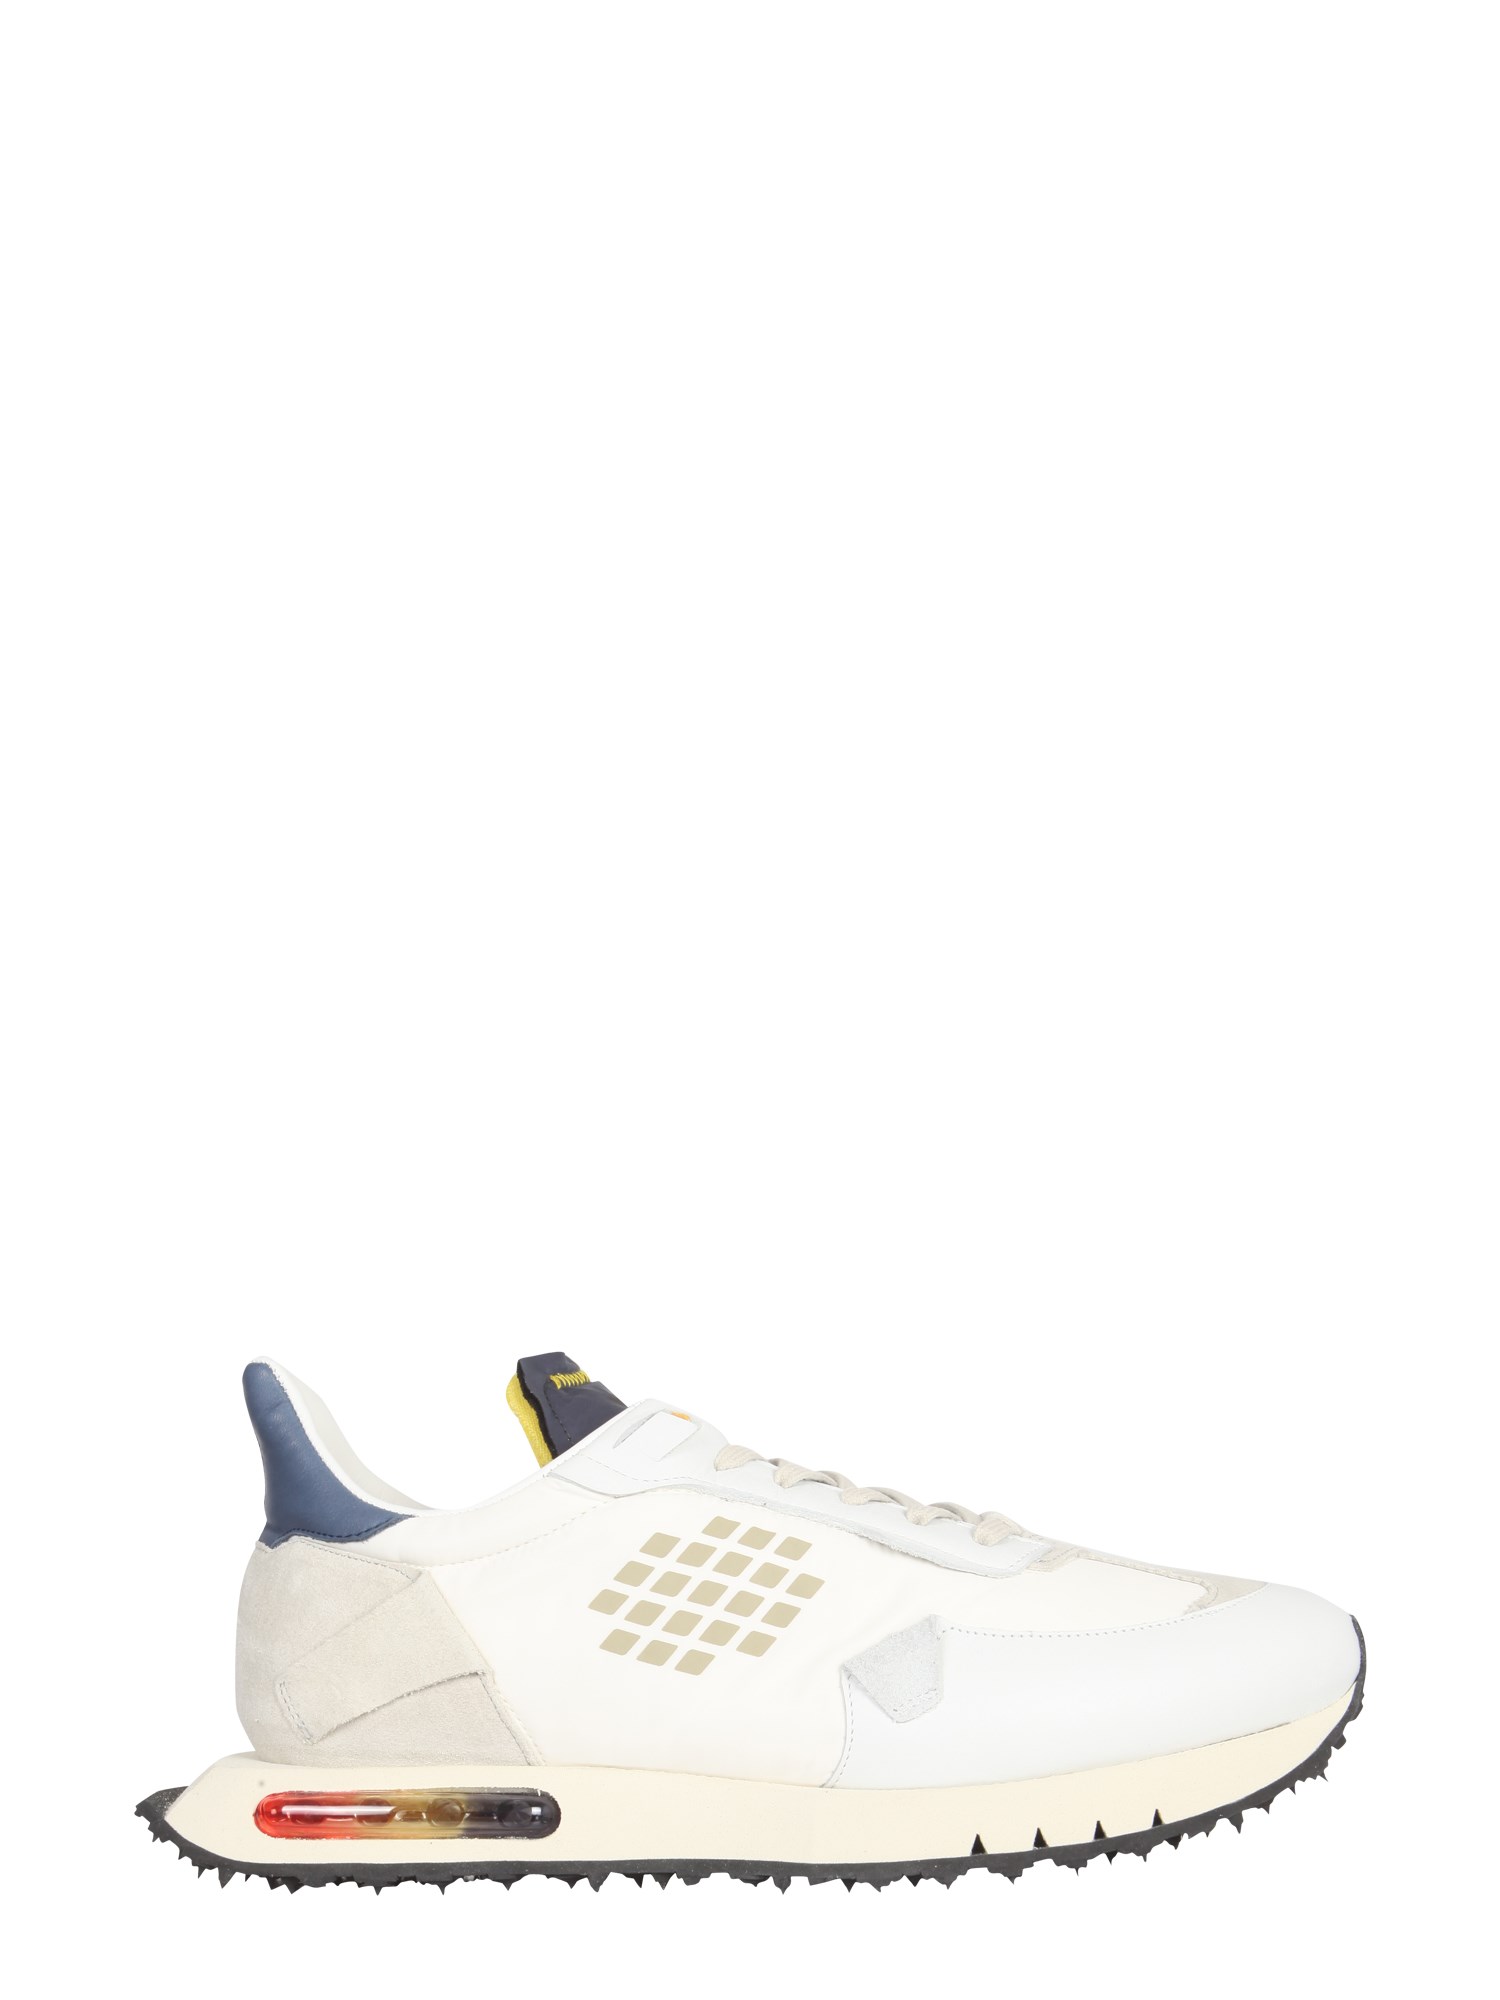 Bepositive Space Run Sneakers In White